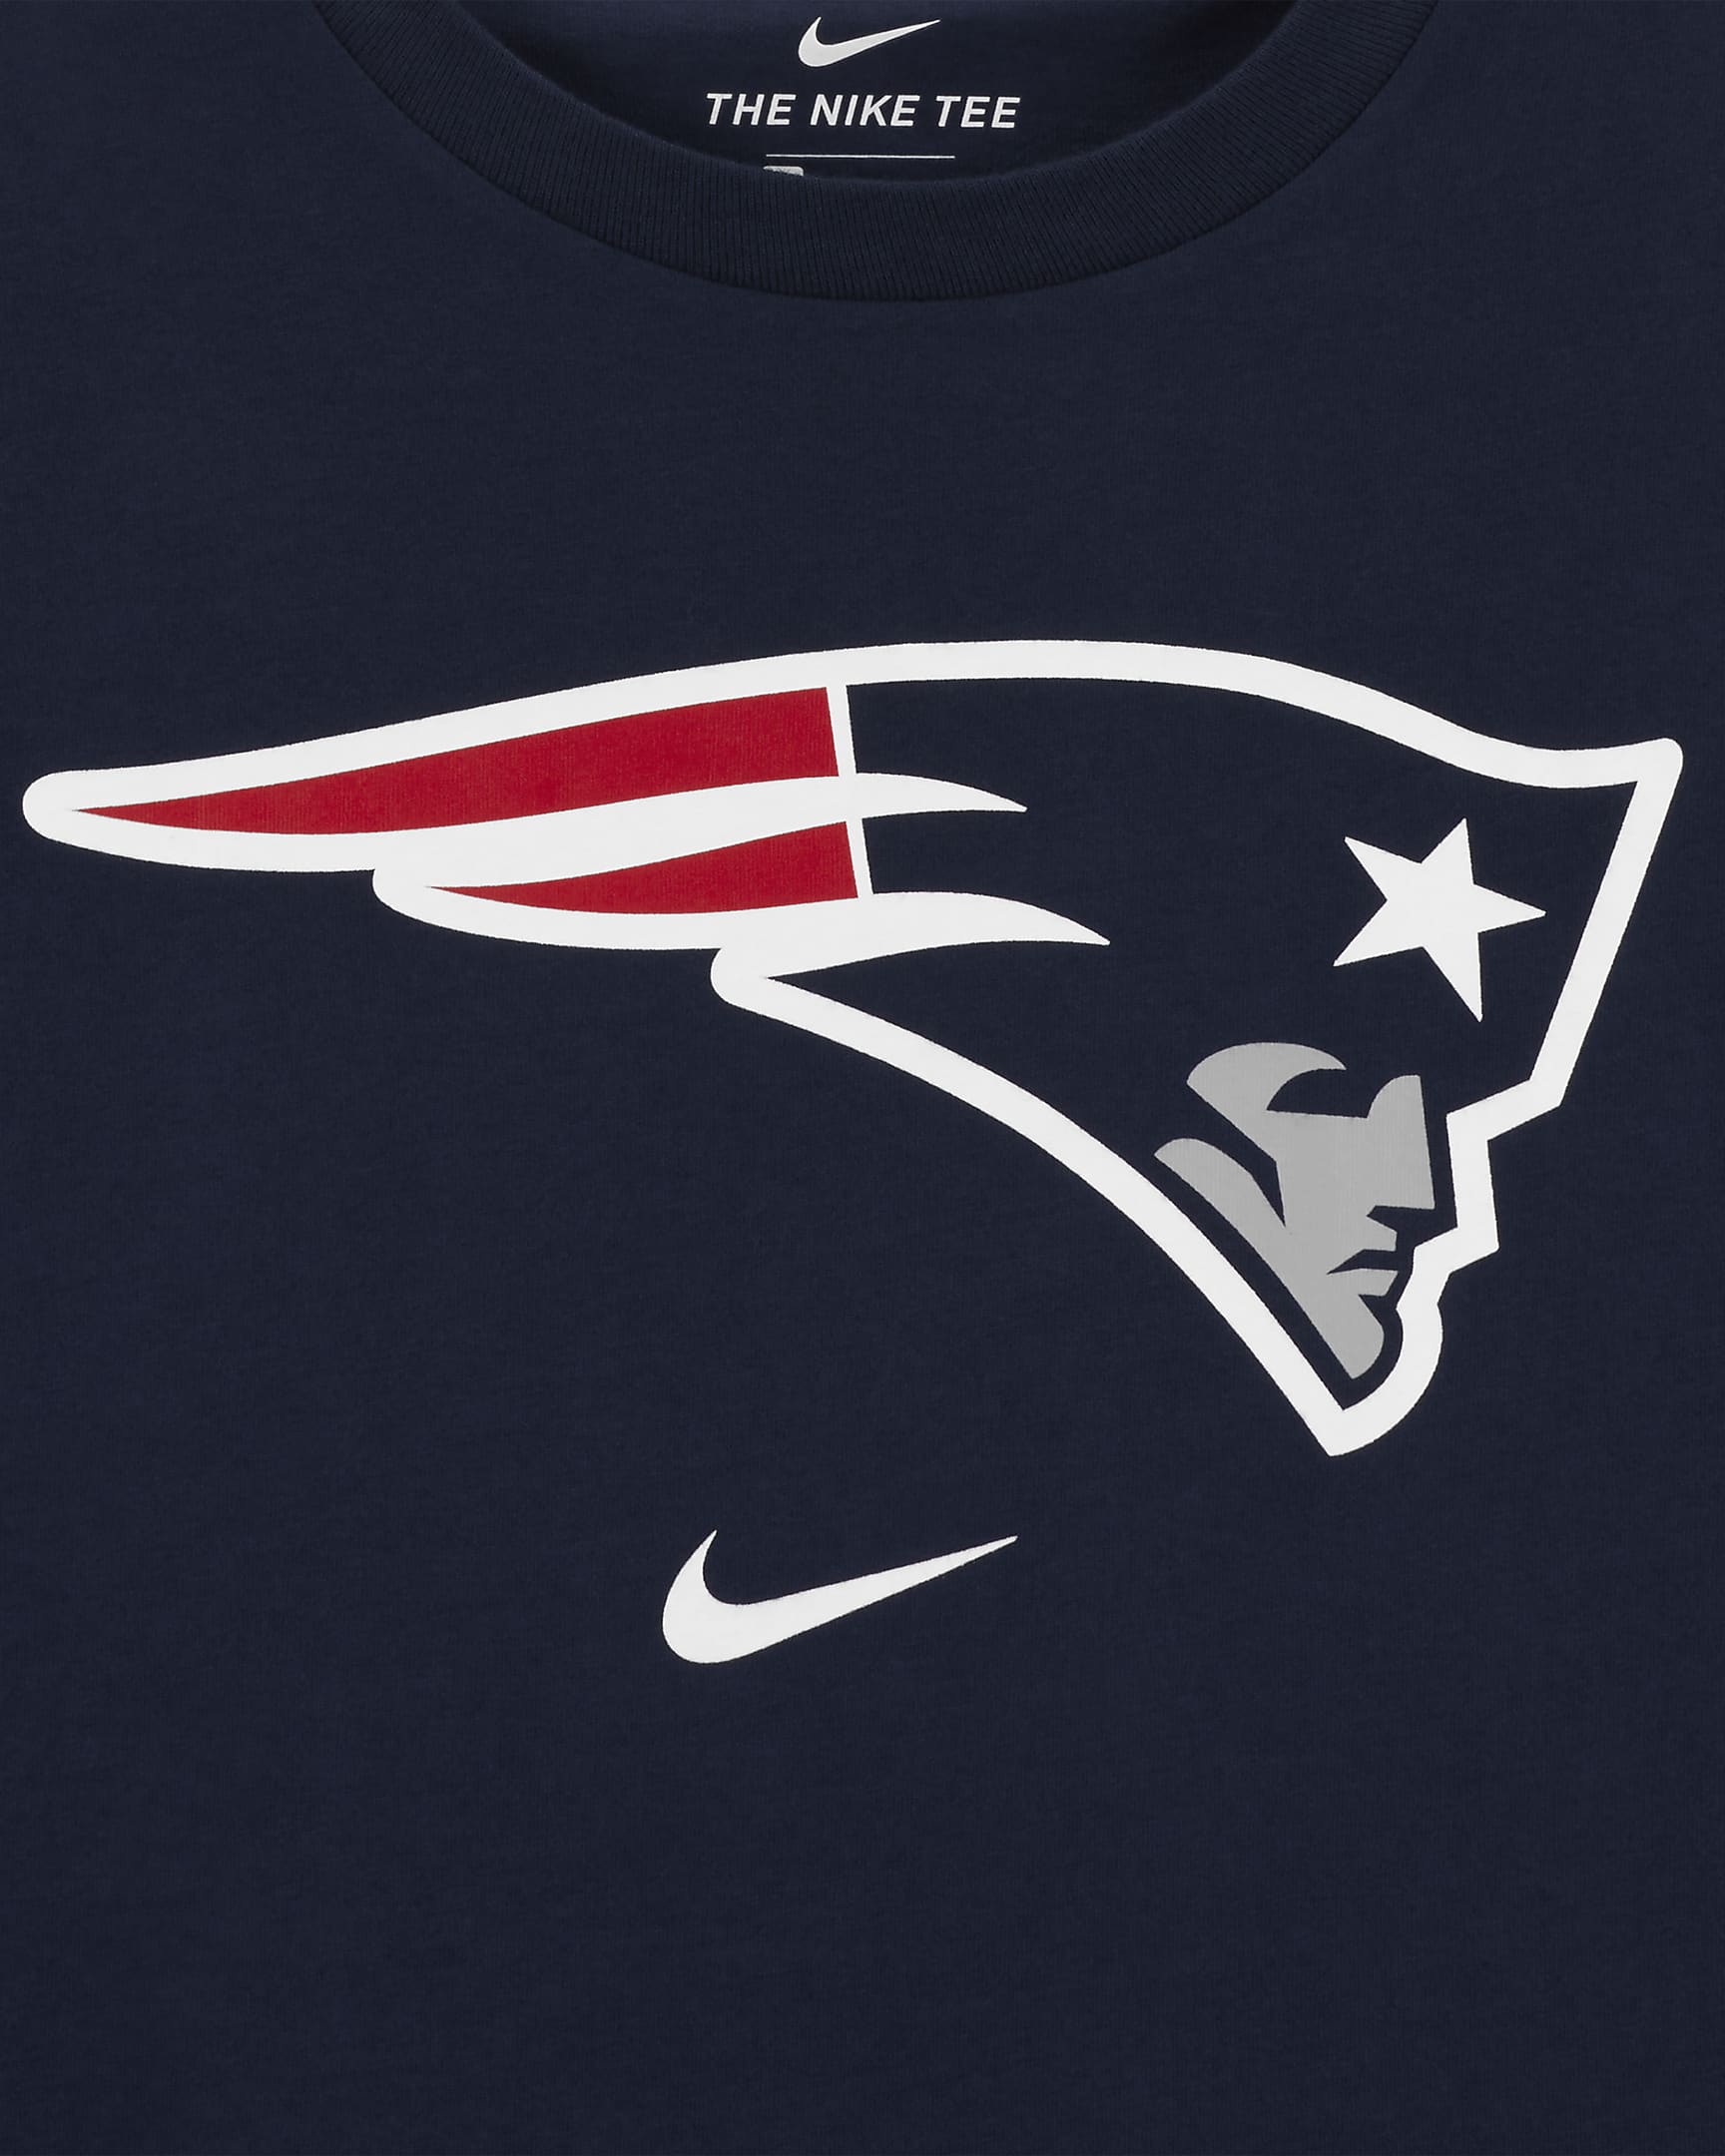 Nike (NFL New England Patriots) T-Shirt für ältere Kinder. Nike AT